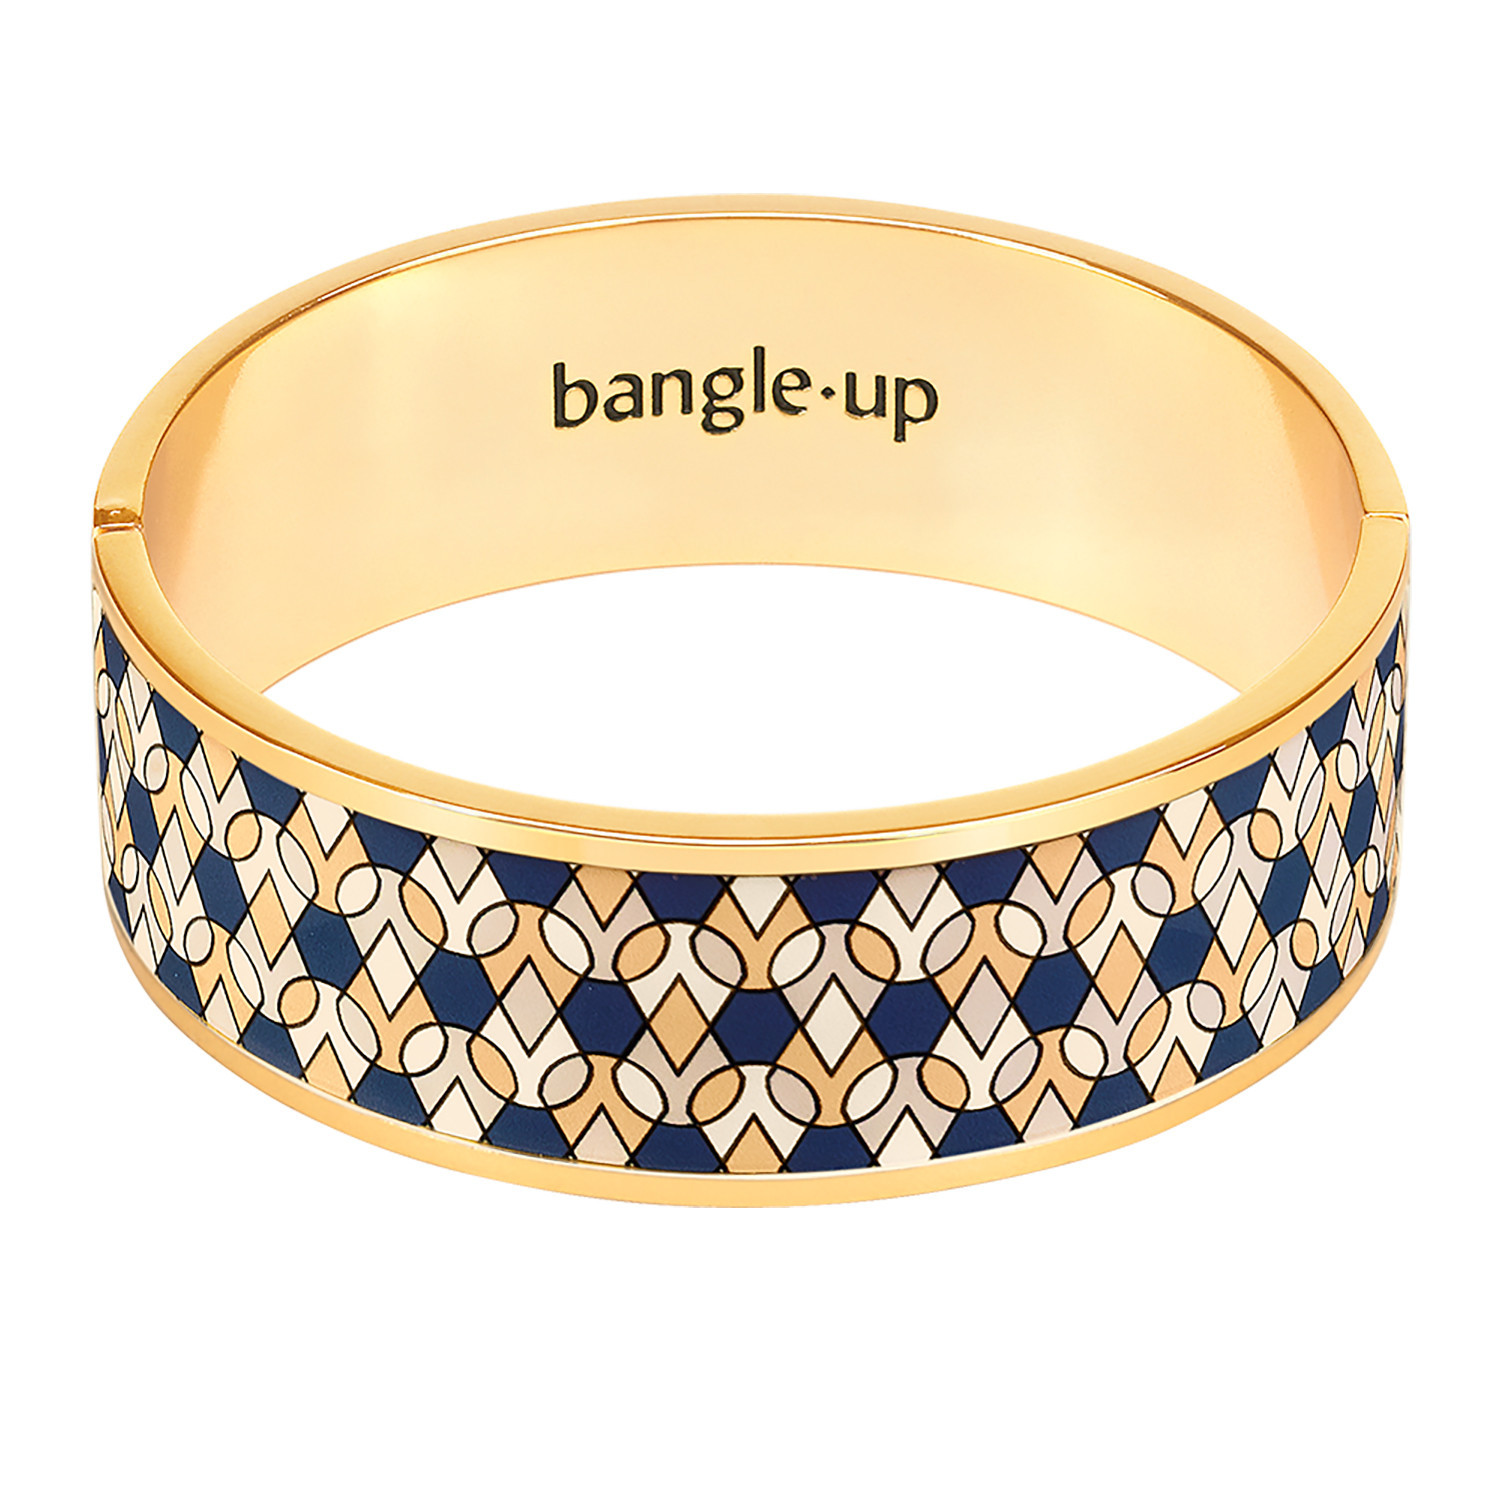 Bracelet jonc Bangle up Pinuply bleu nuit
Taille 2